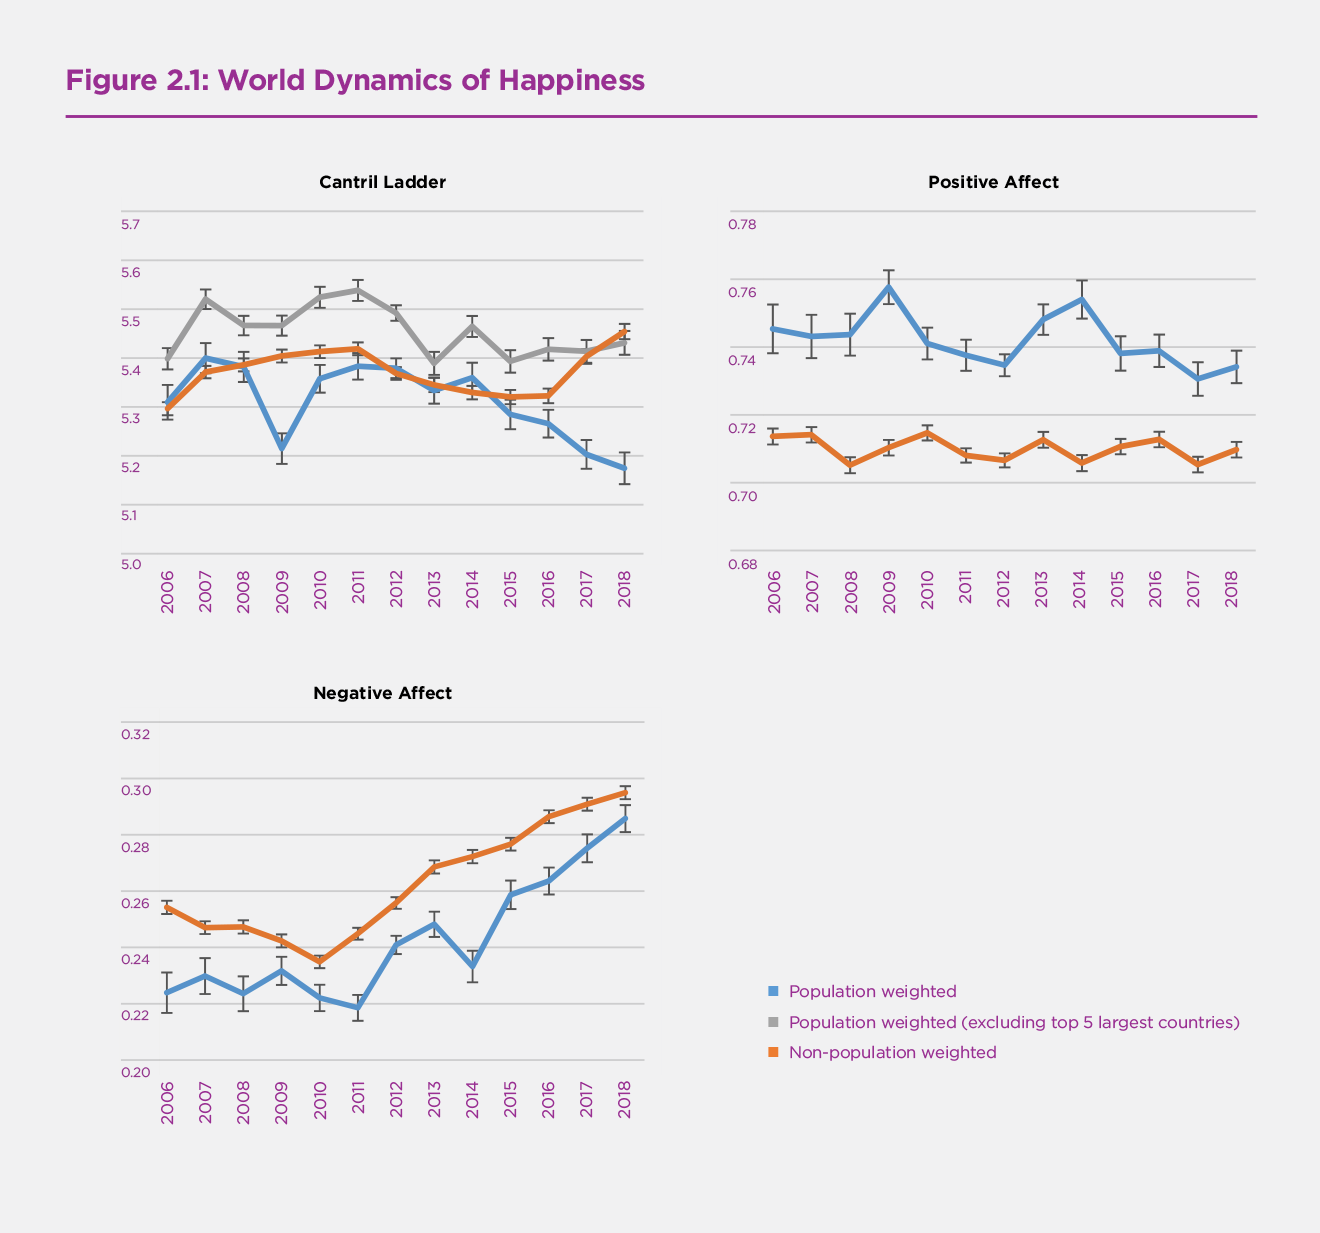 Figure 2.1 World Dynamics of Happiness